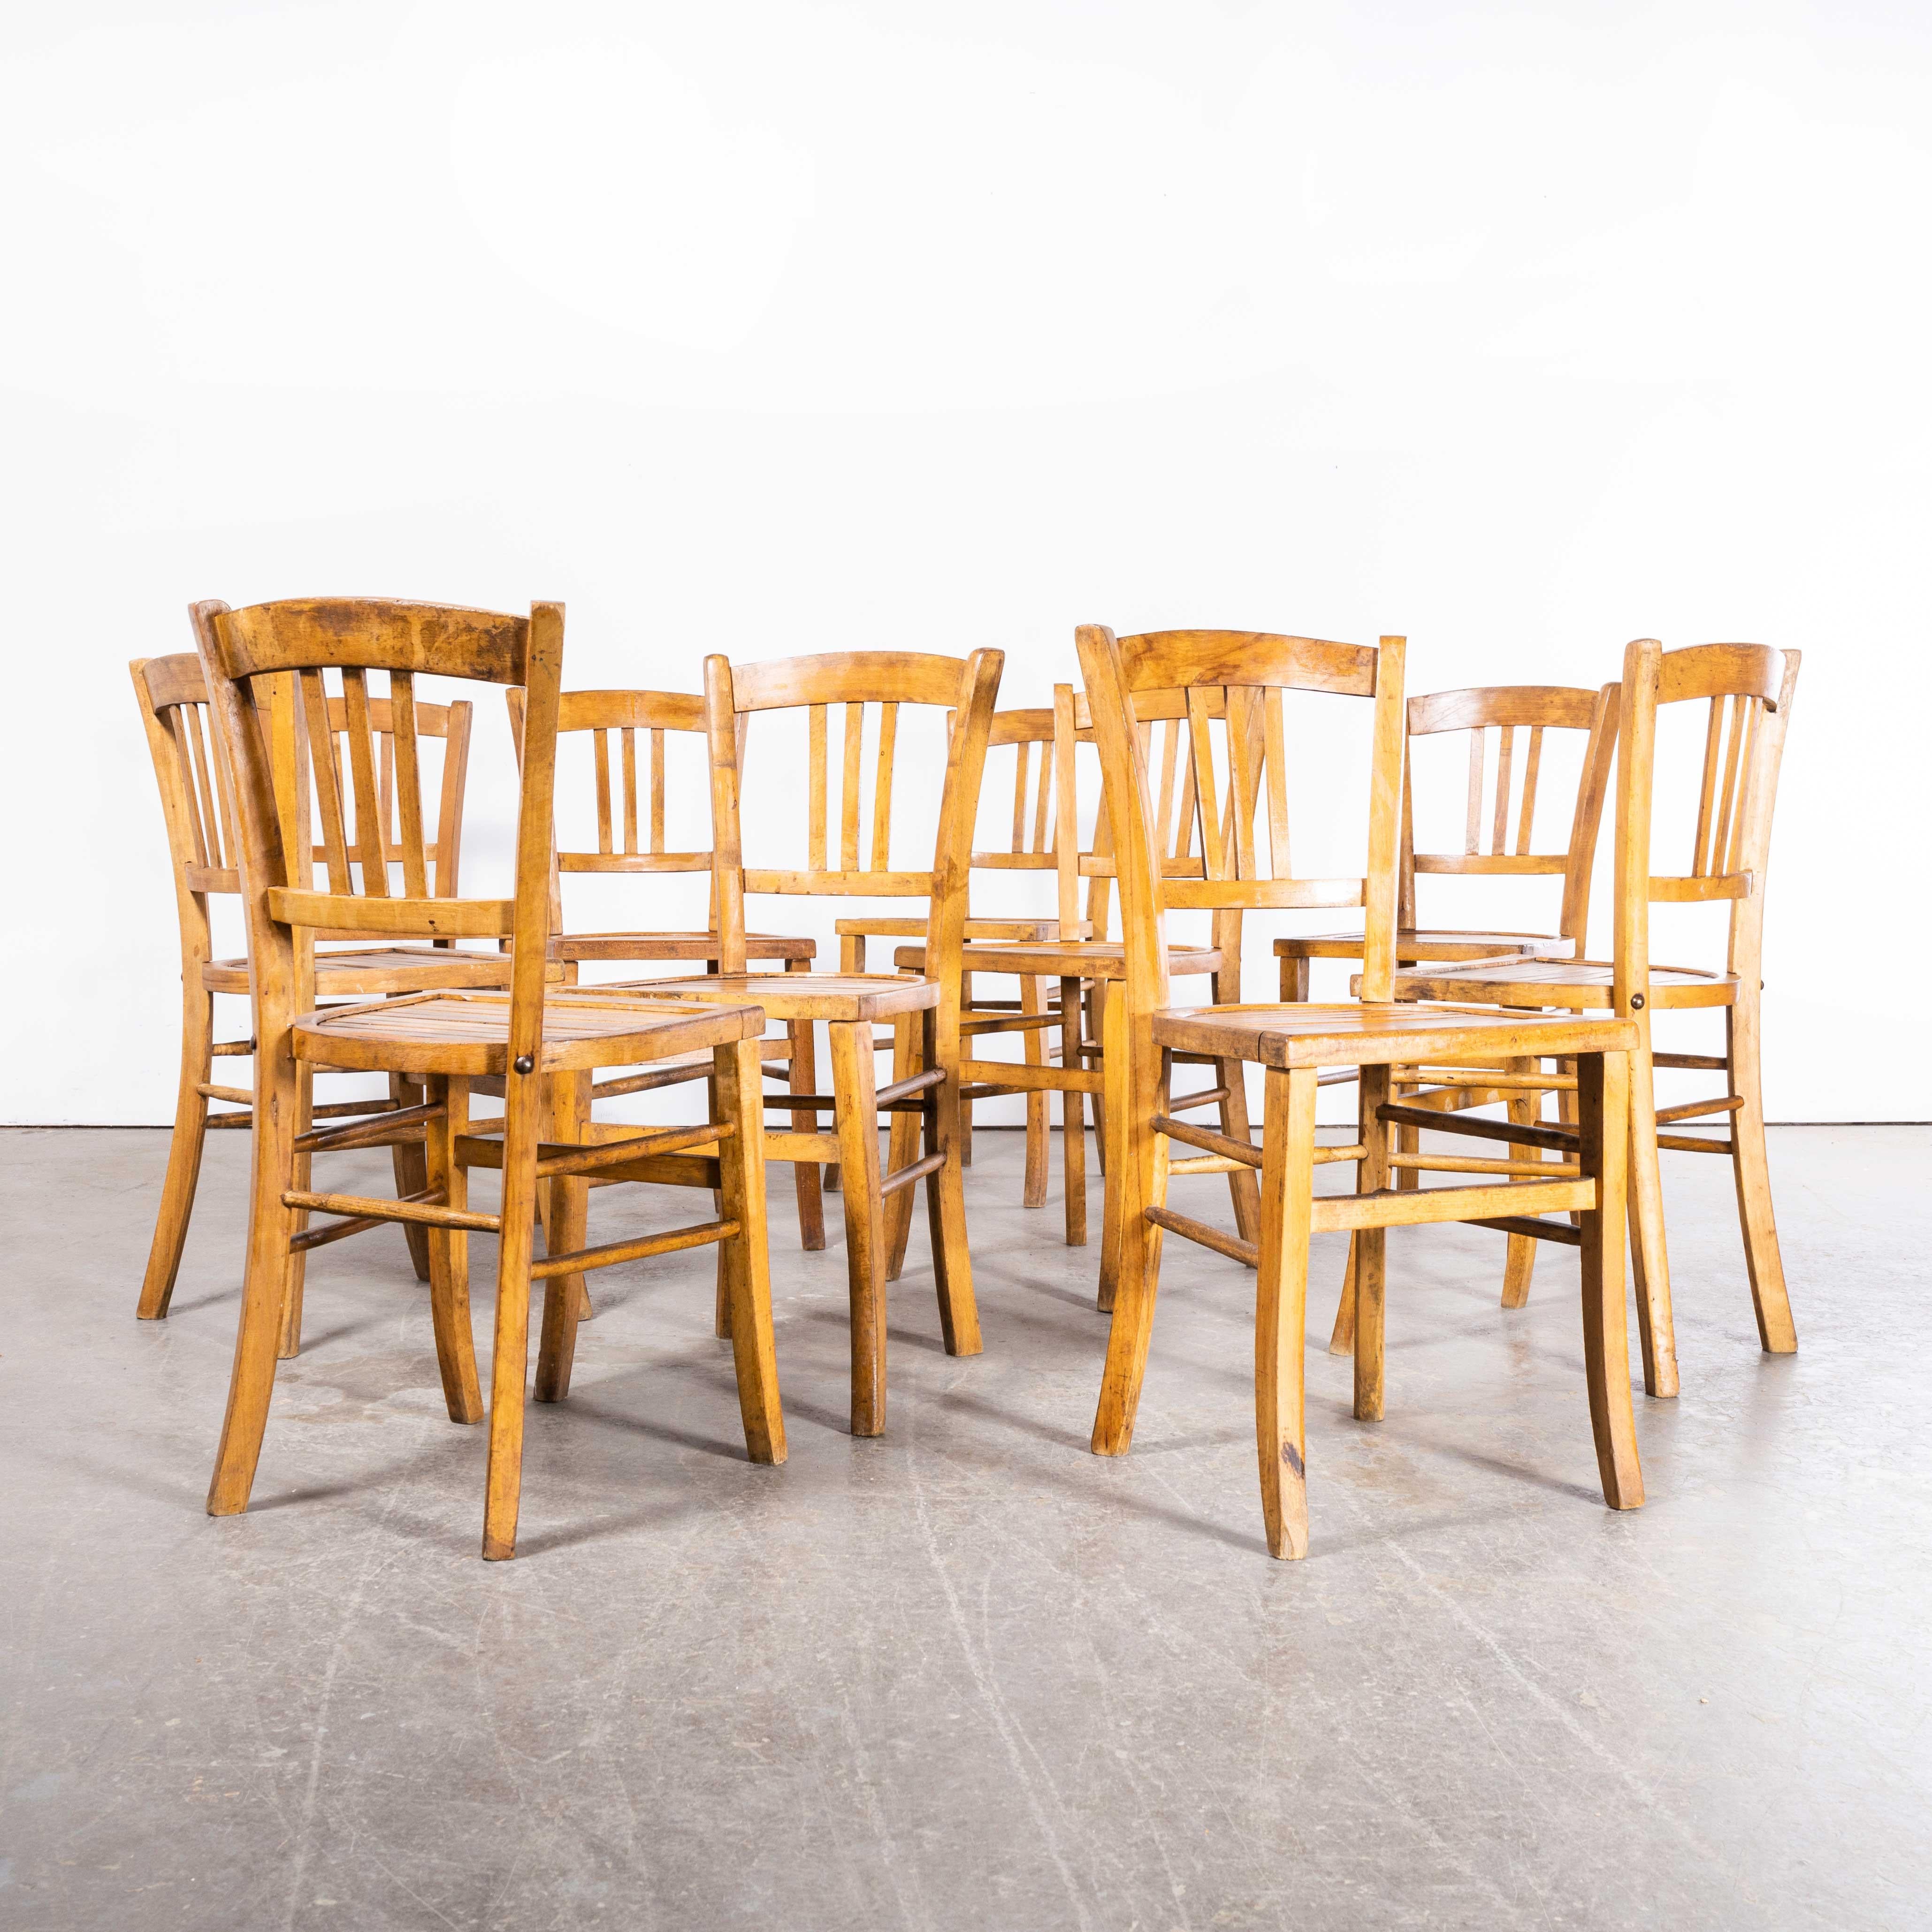 Français Original 1950's French Slatted Farmhouse Chairs From Provence - Set Of Ten en vente